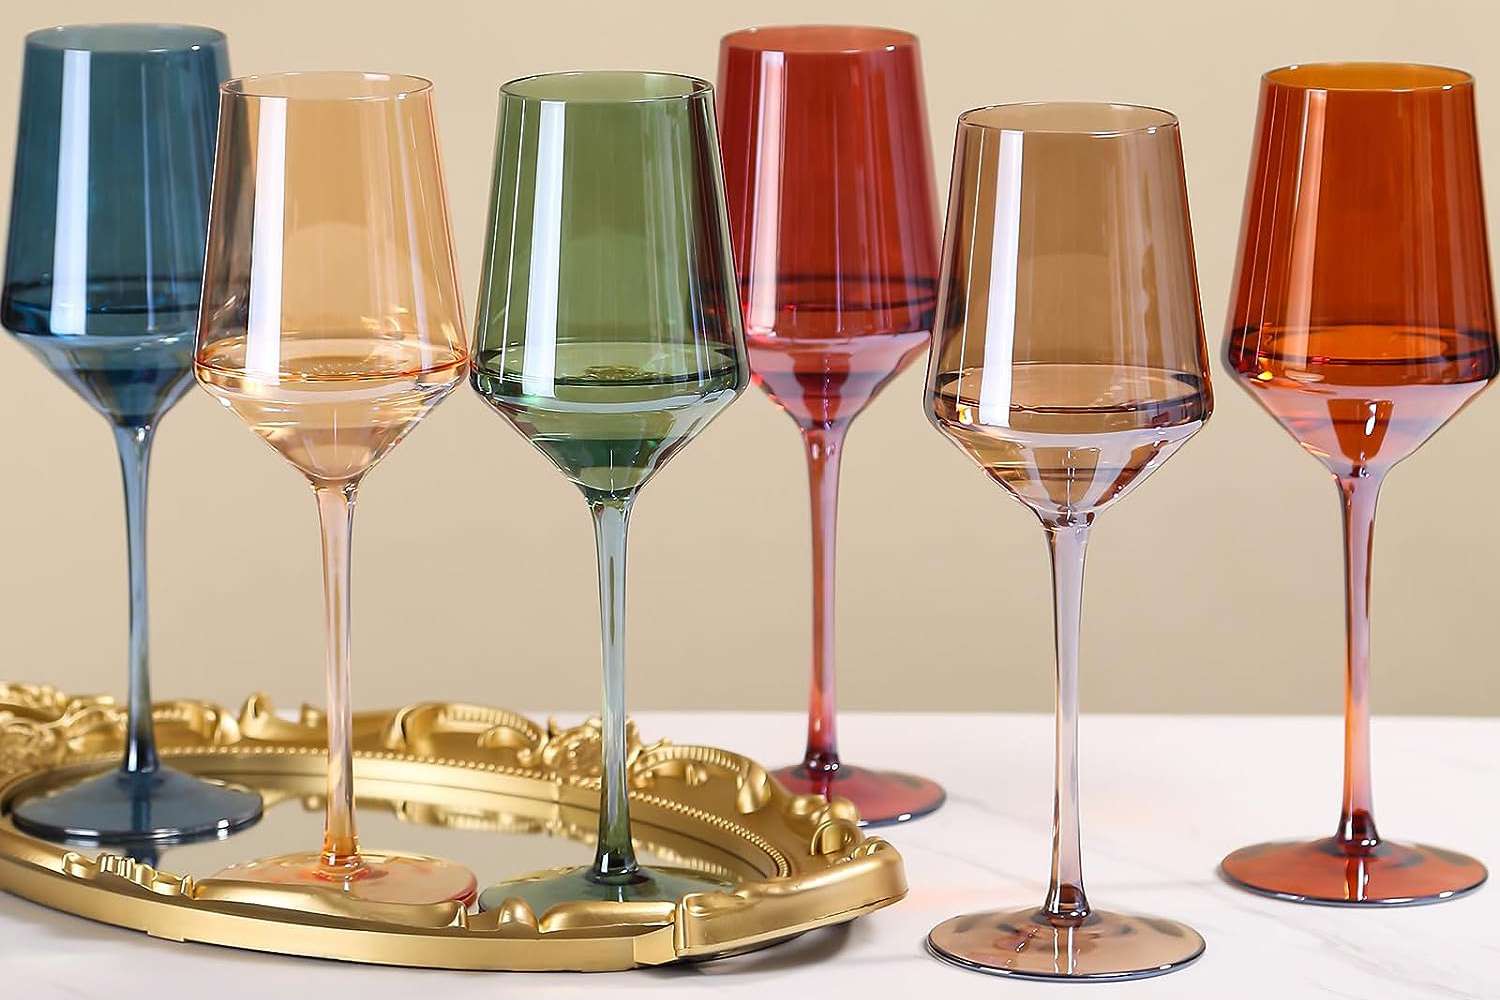 Amazon Physkoa Colored Wine Glasses Set of 6